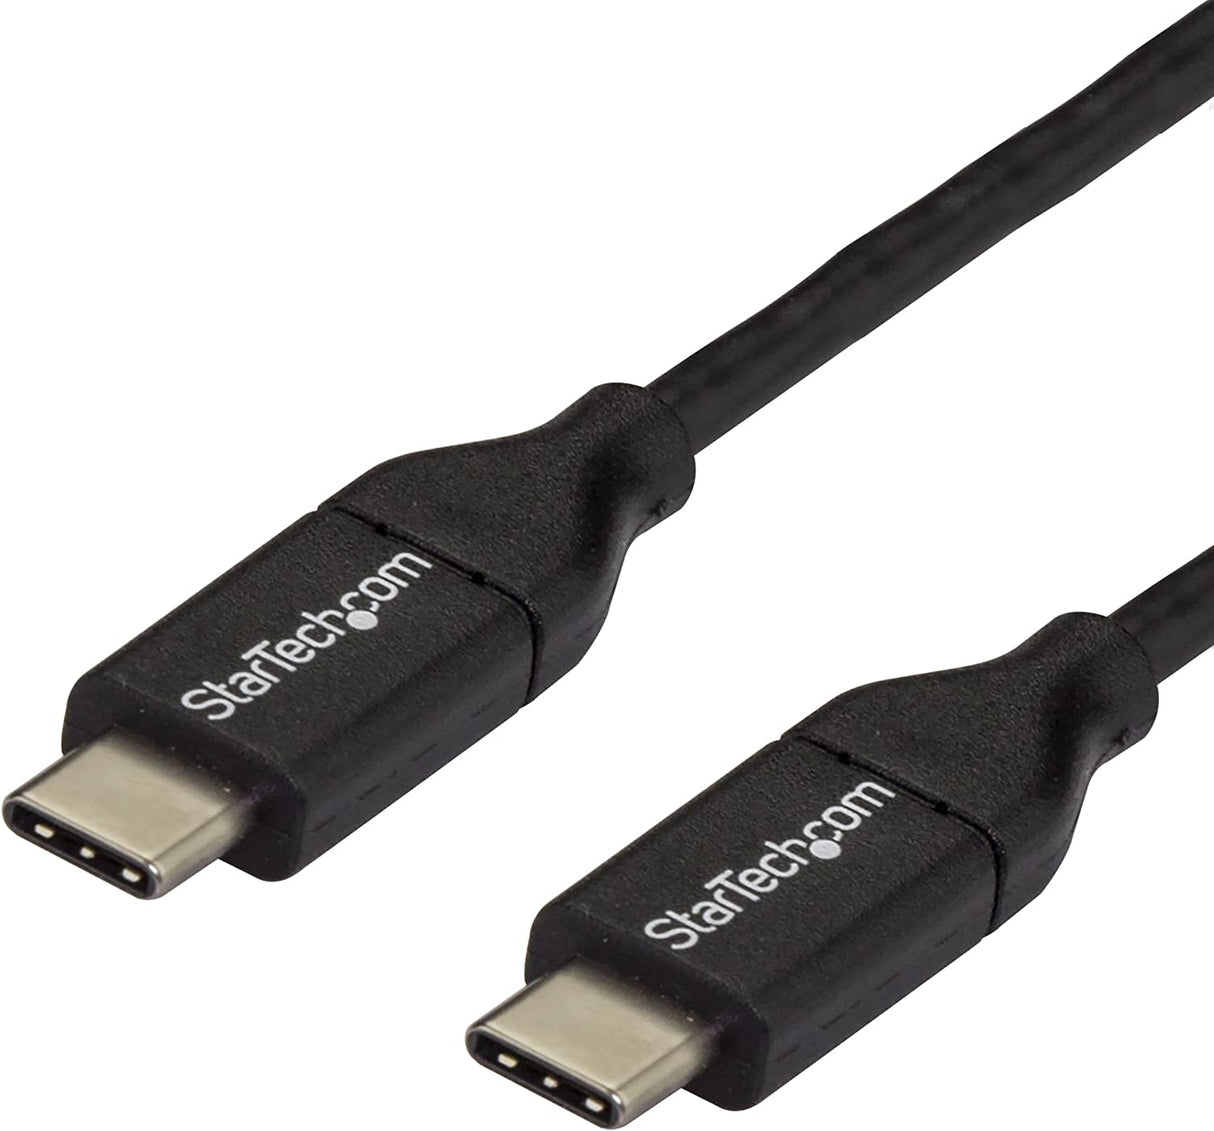 StarTech.com USB C to USB C Cable - 3m / 10 ft - USB Cable Male to Male - USB-C Cable - USB-C Charge Cable - USB Type C Cable - USB 2.0 (USB2CC3M), Black 10 ft/ 3 m Standard